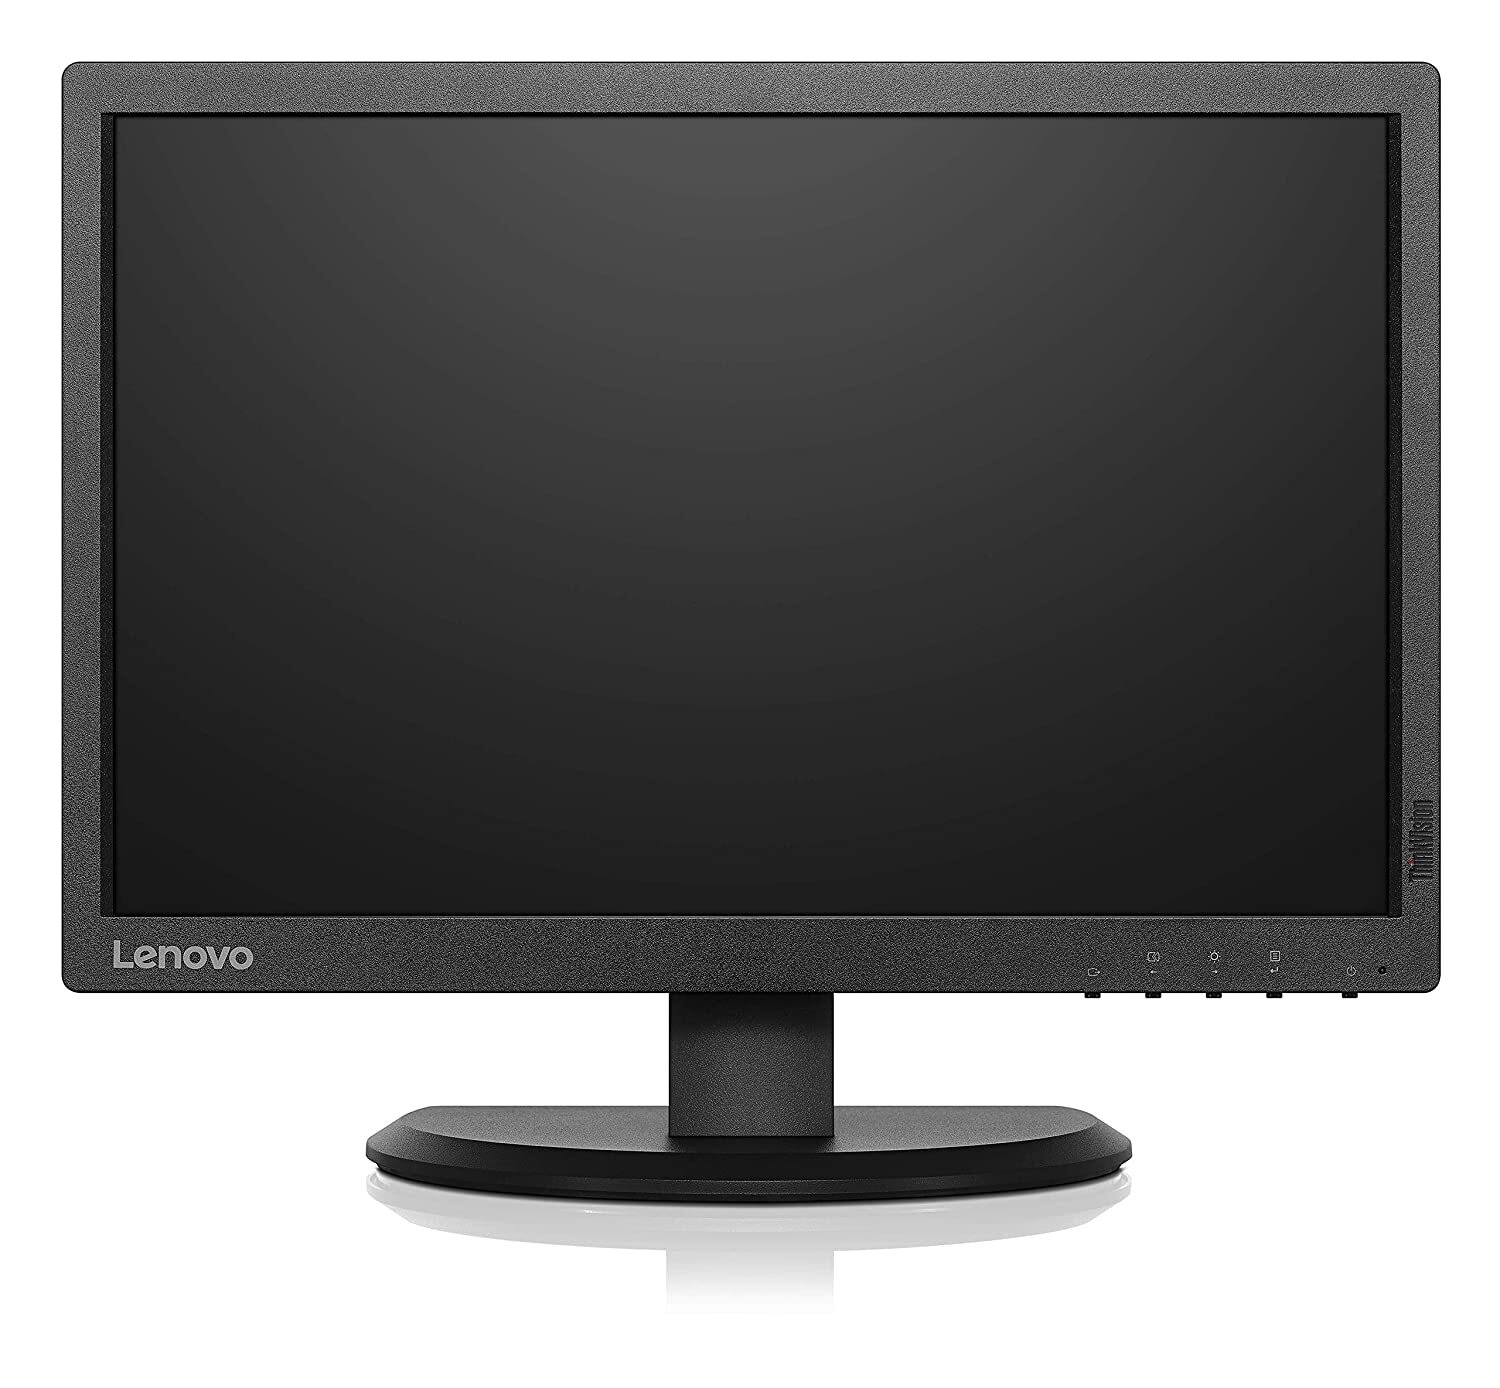 Lenovo Desktop M710E 10UQS0MY00 PDC-G4560, 4GB (2Dimm,32GB) RAM, 1TB HDD, DOS OS and Monitor 19.5 inch E2054-M000000000364 www.mysocially.com